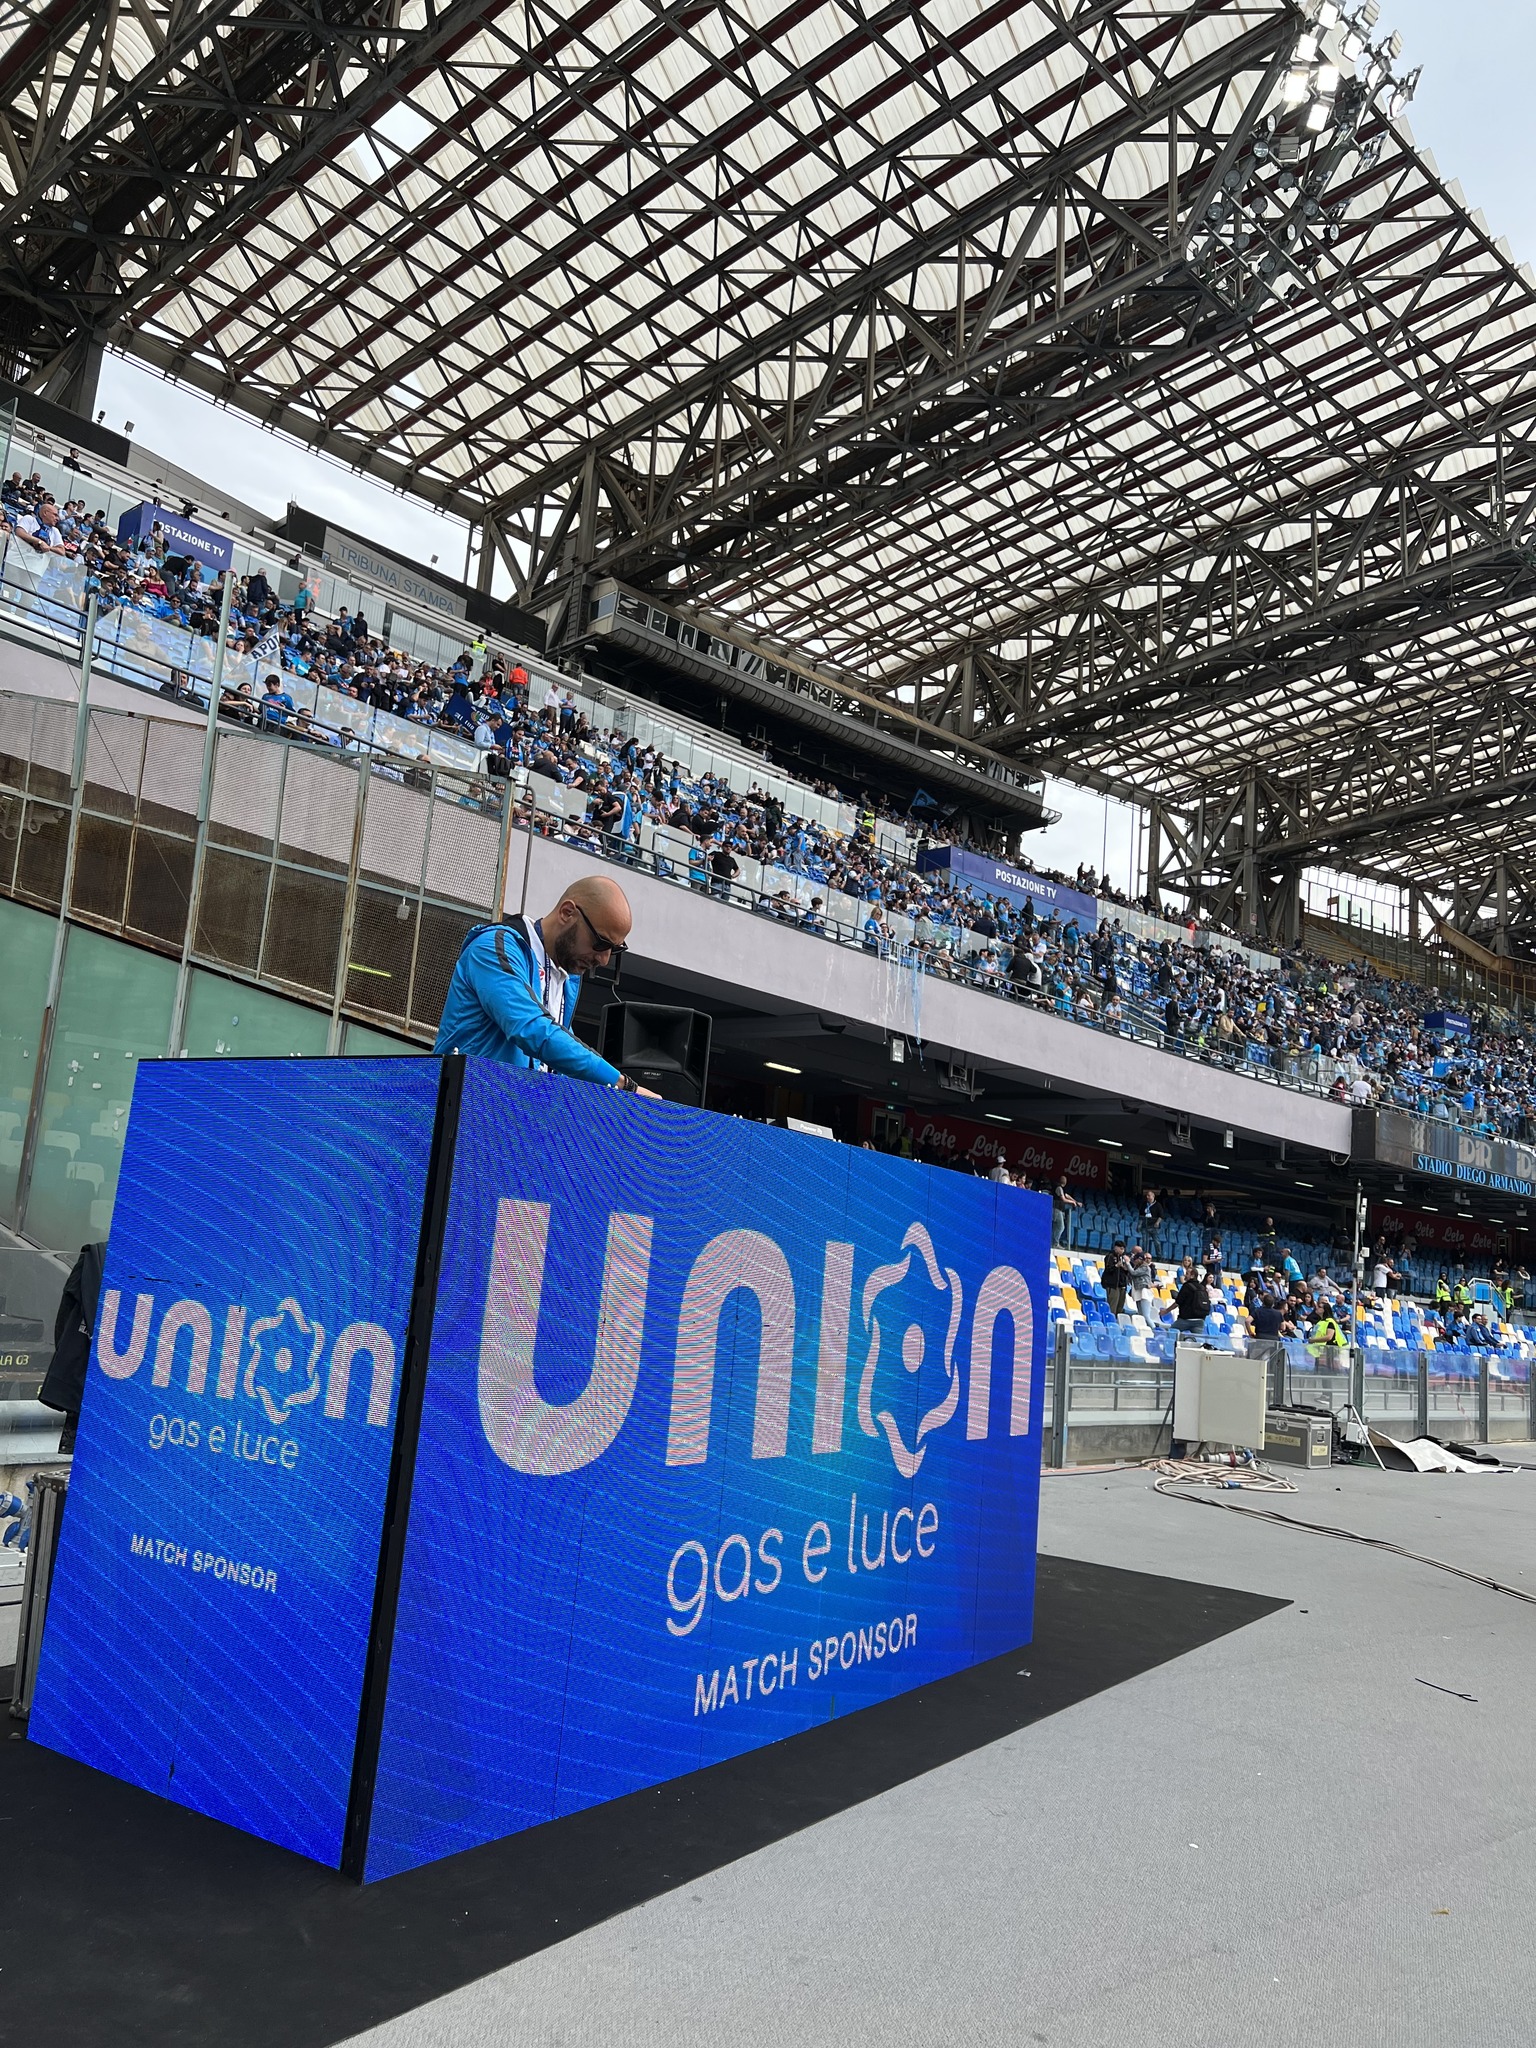 DJ Set di Decibel Bellini allo stadio Diego Armando Maradona al matchday sponsor Union Gas e Luce